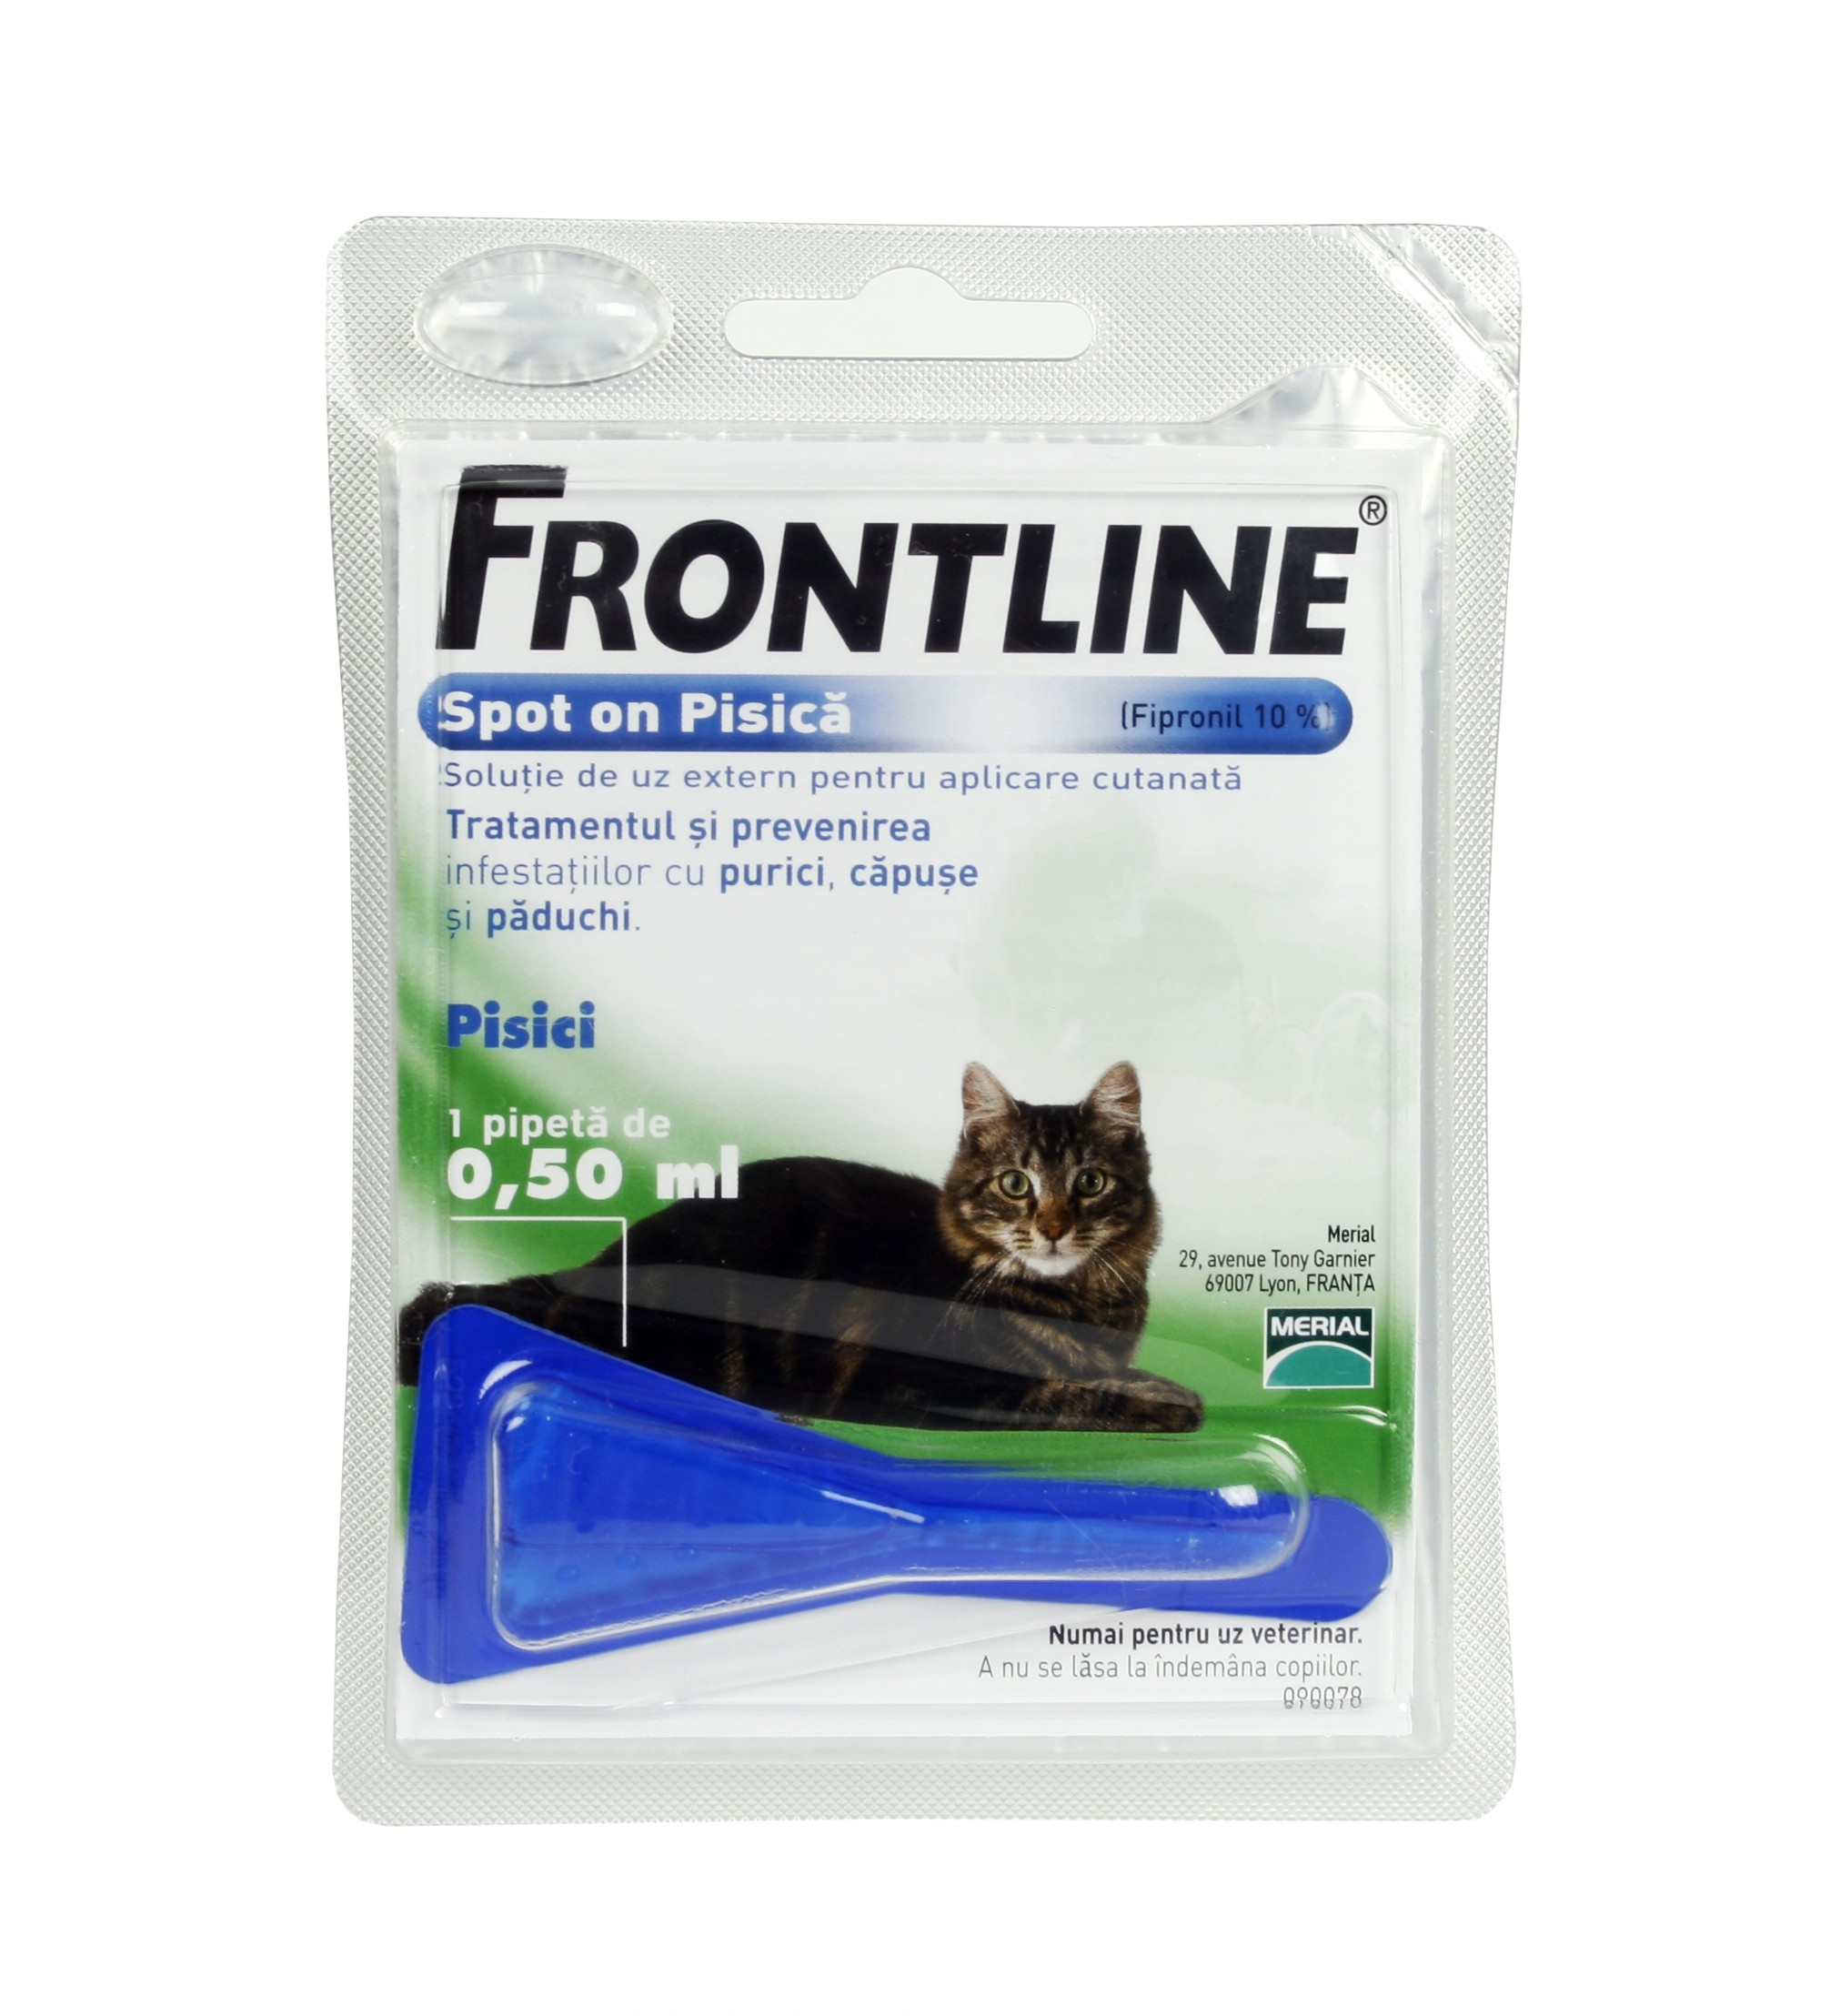 Frontline Spot On Pisica – 1 Pipeta Antiparazitara petmart